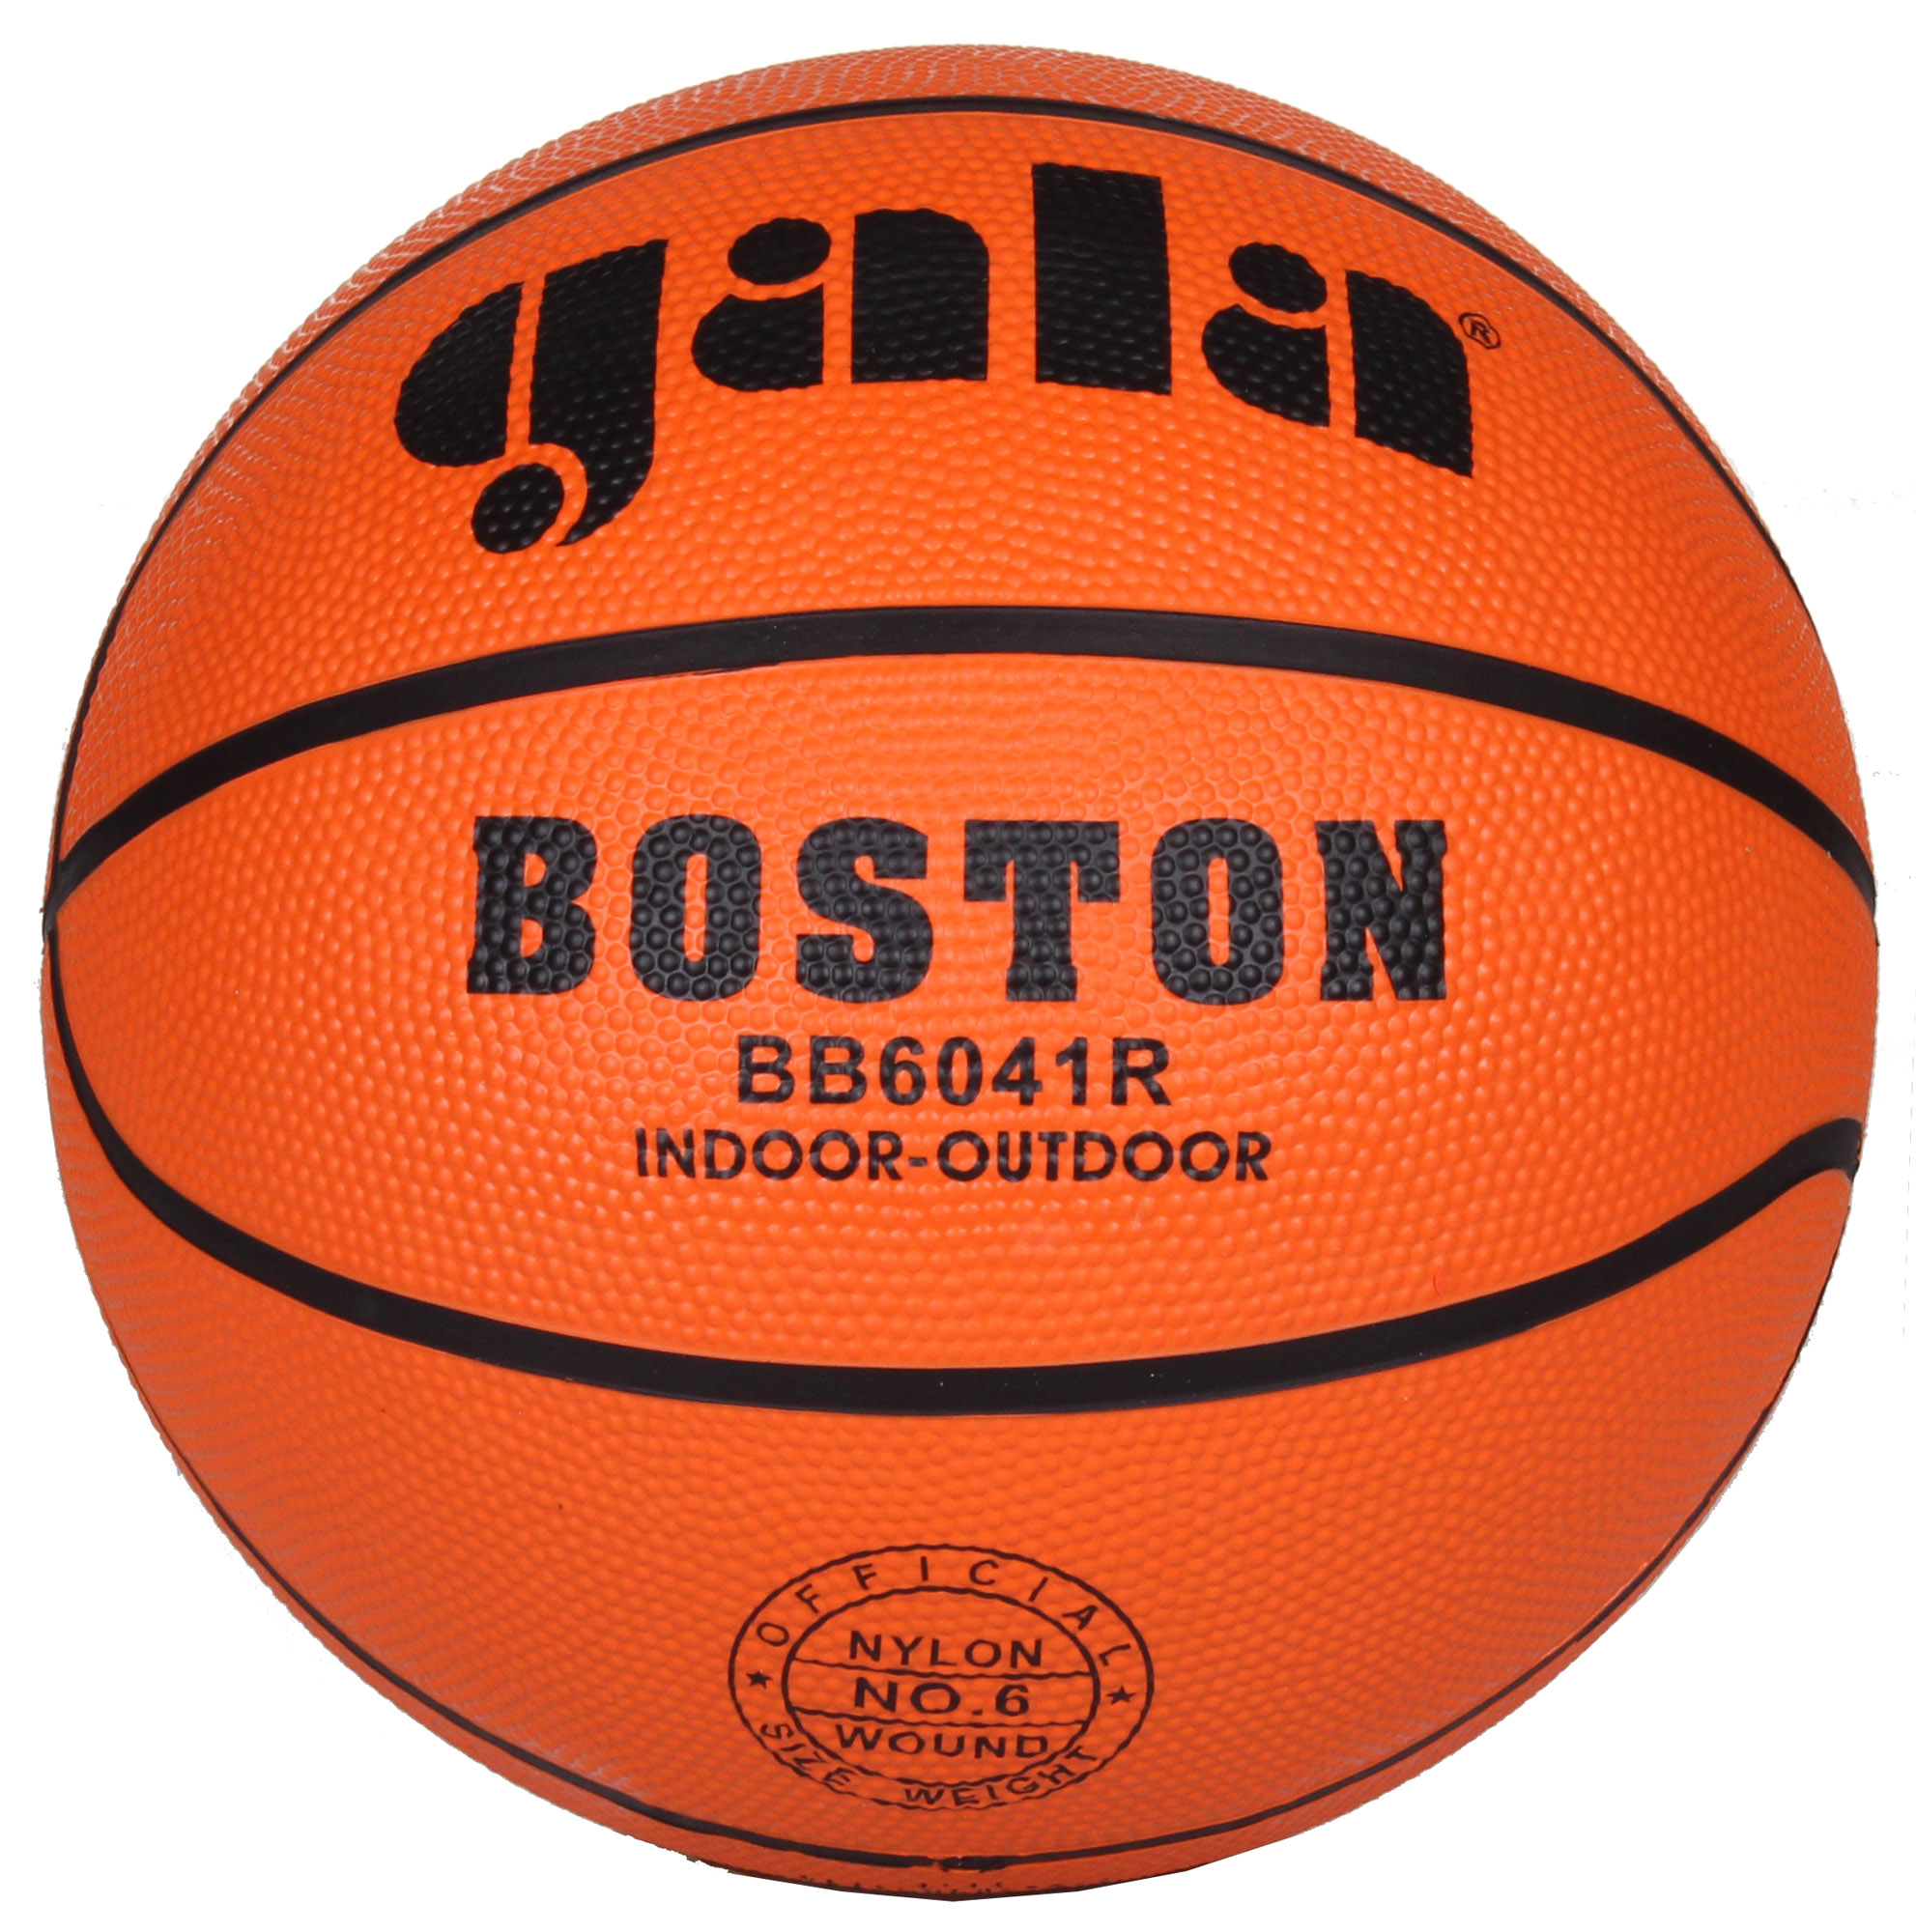 Gala Boston BB6041R basketbalová lopta č. 6